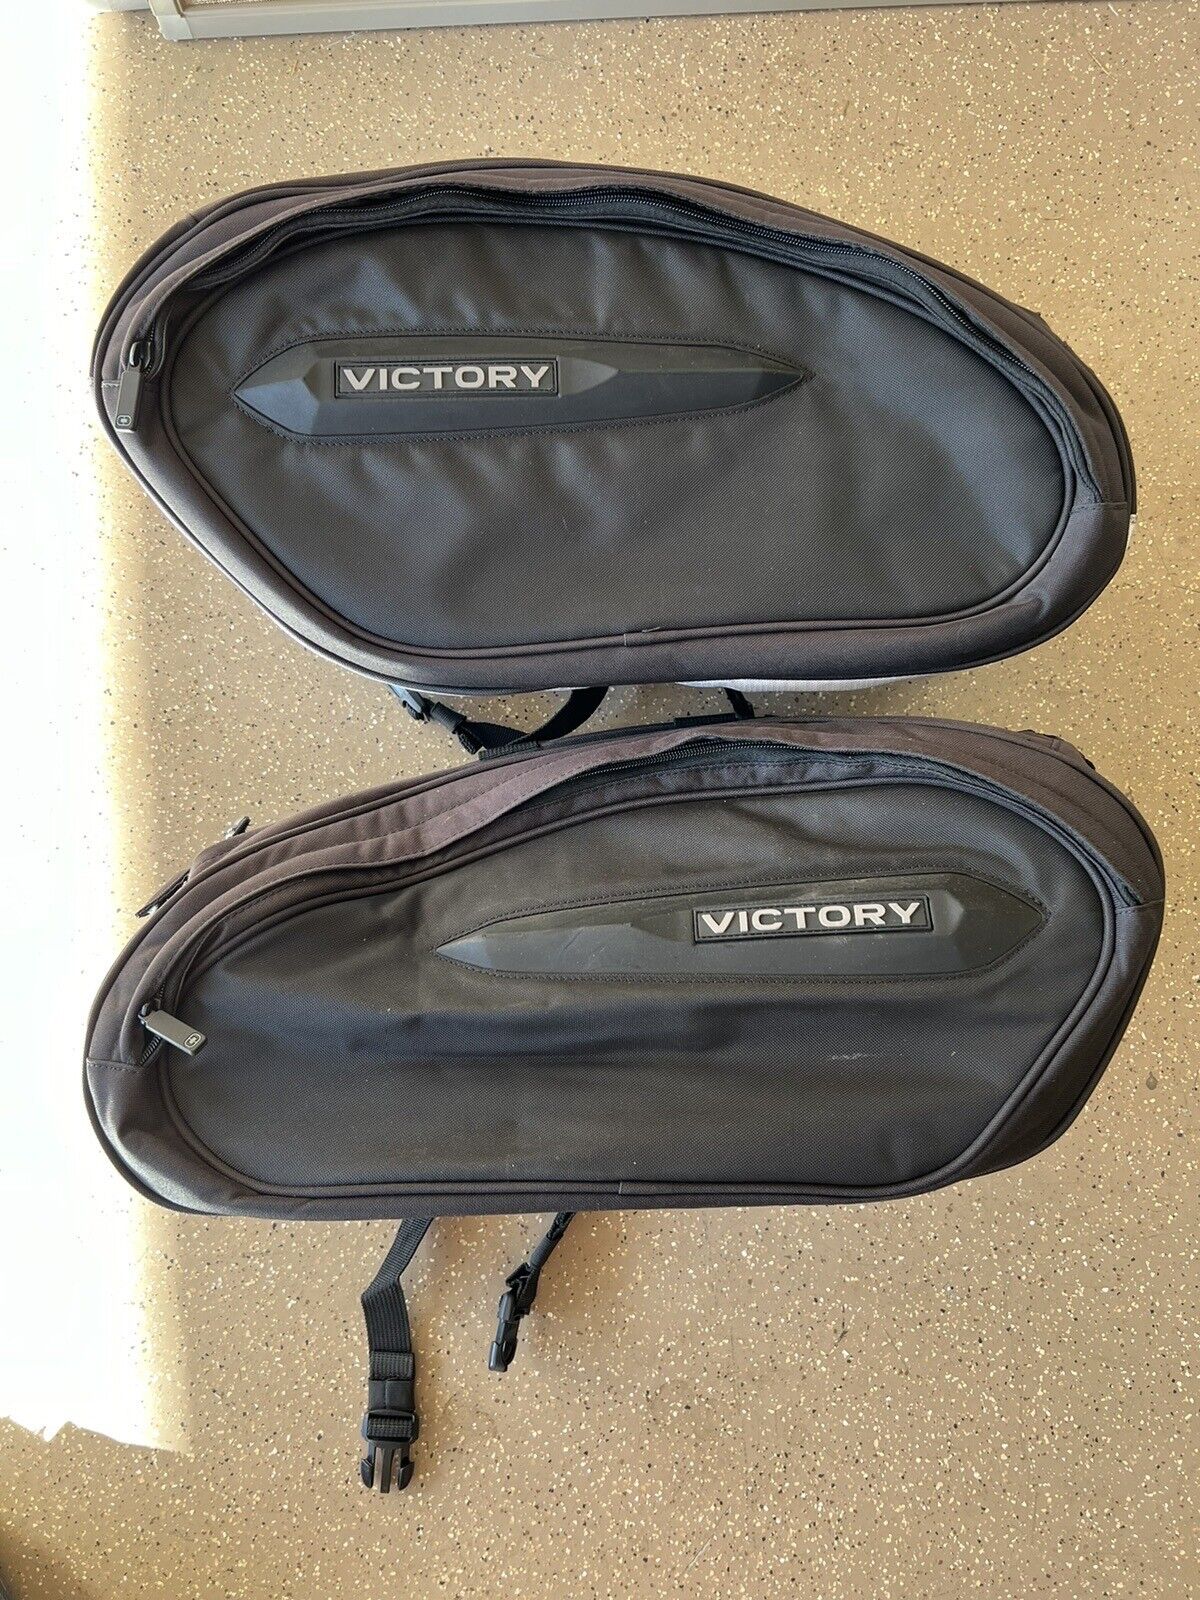 2 - OGIO Victory Motorcycle Soft Saddlebags Saddle Bags Tail Bag